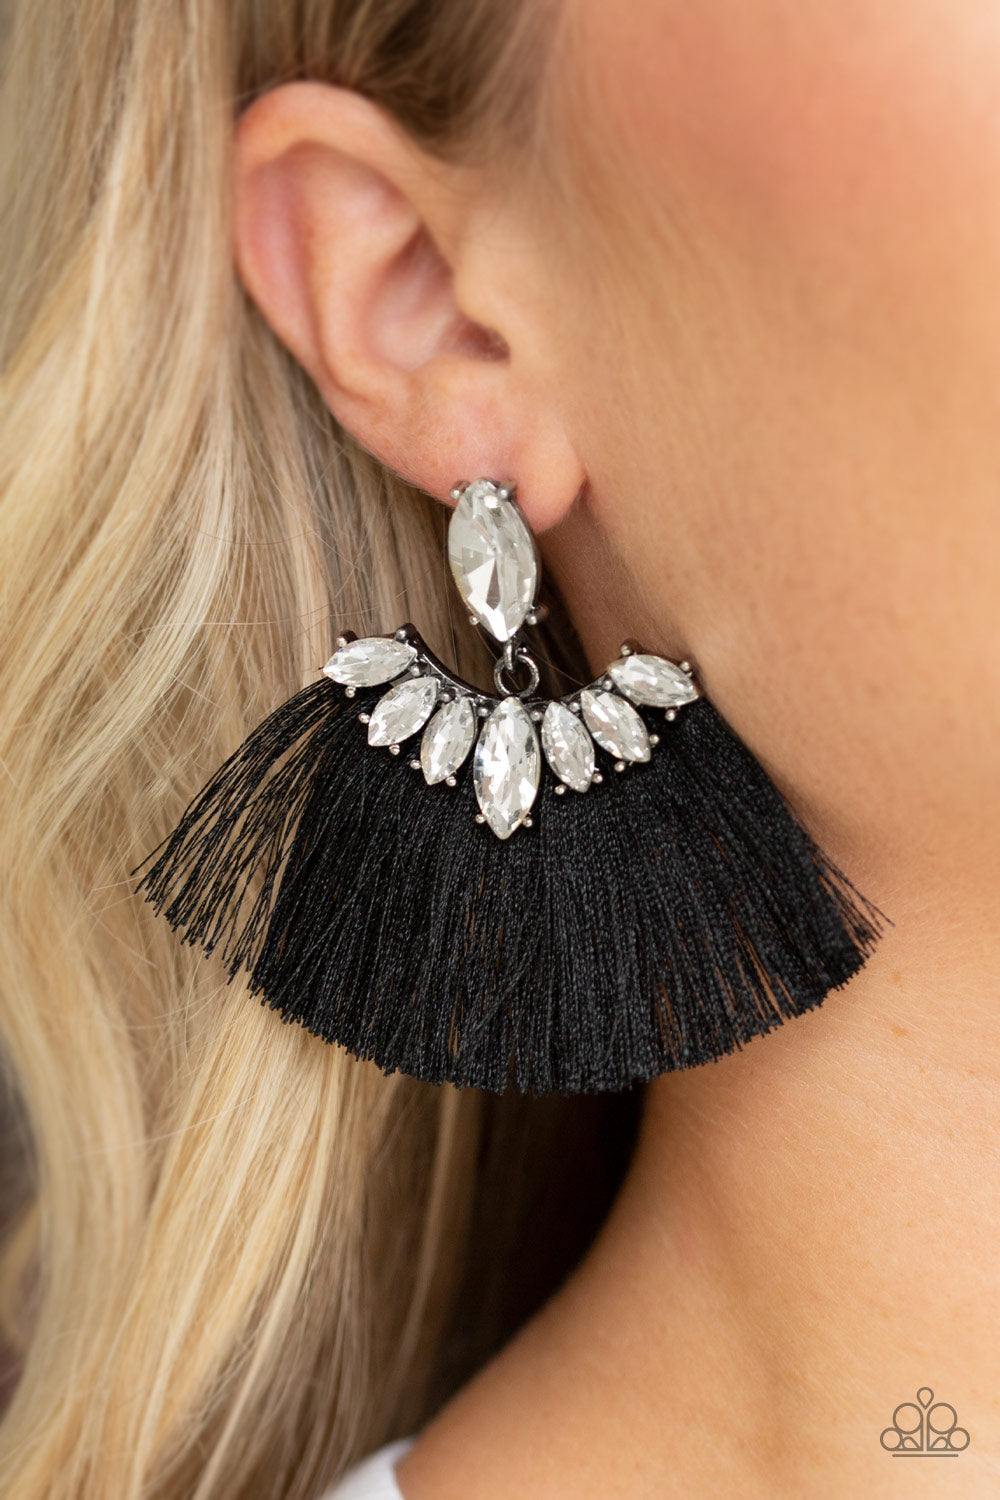 Paparazzi Formal Flair - Black - Thread / Fringe - Rhinestones - Post Earrings - $5 Jewelry With Ashley Swint